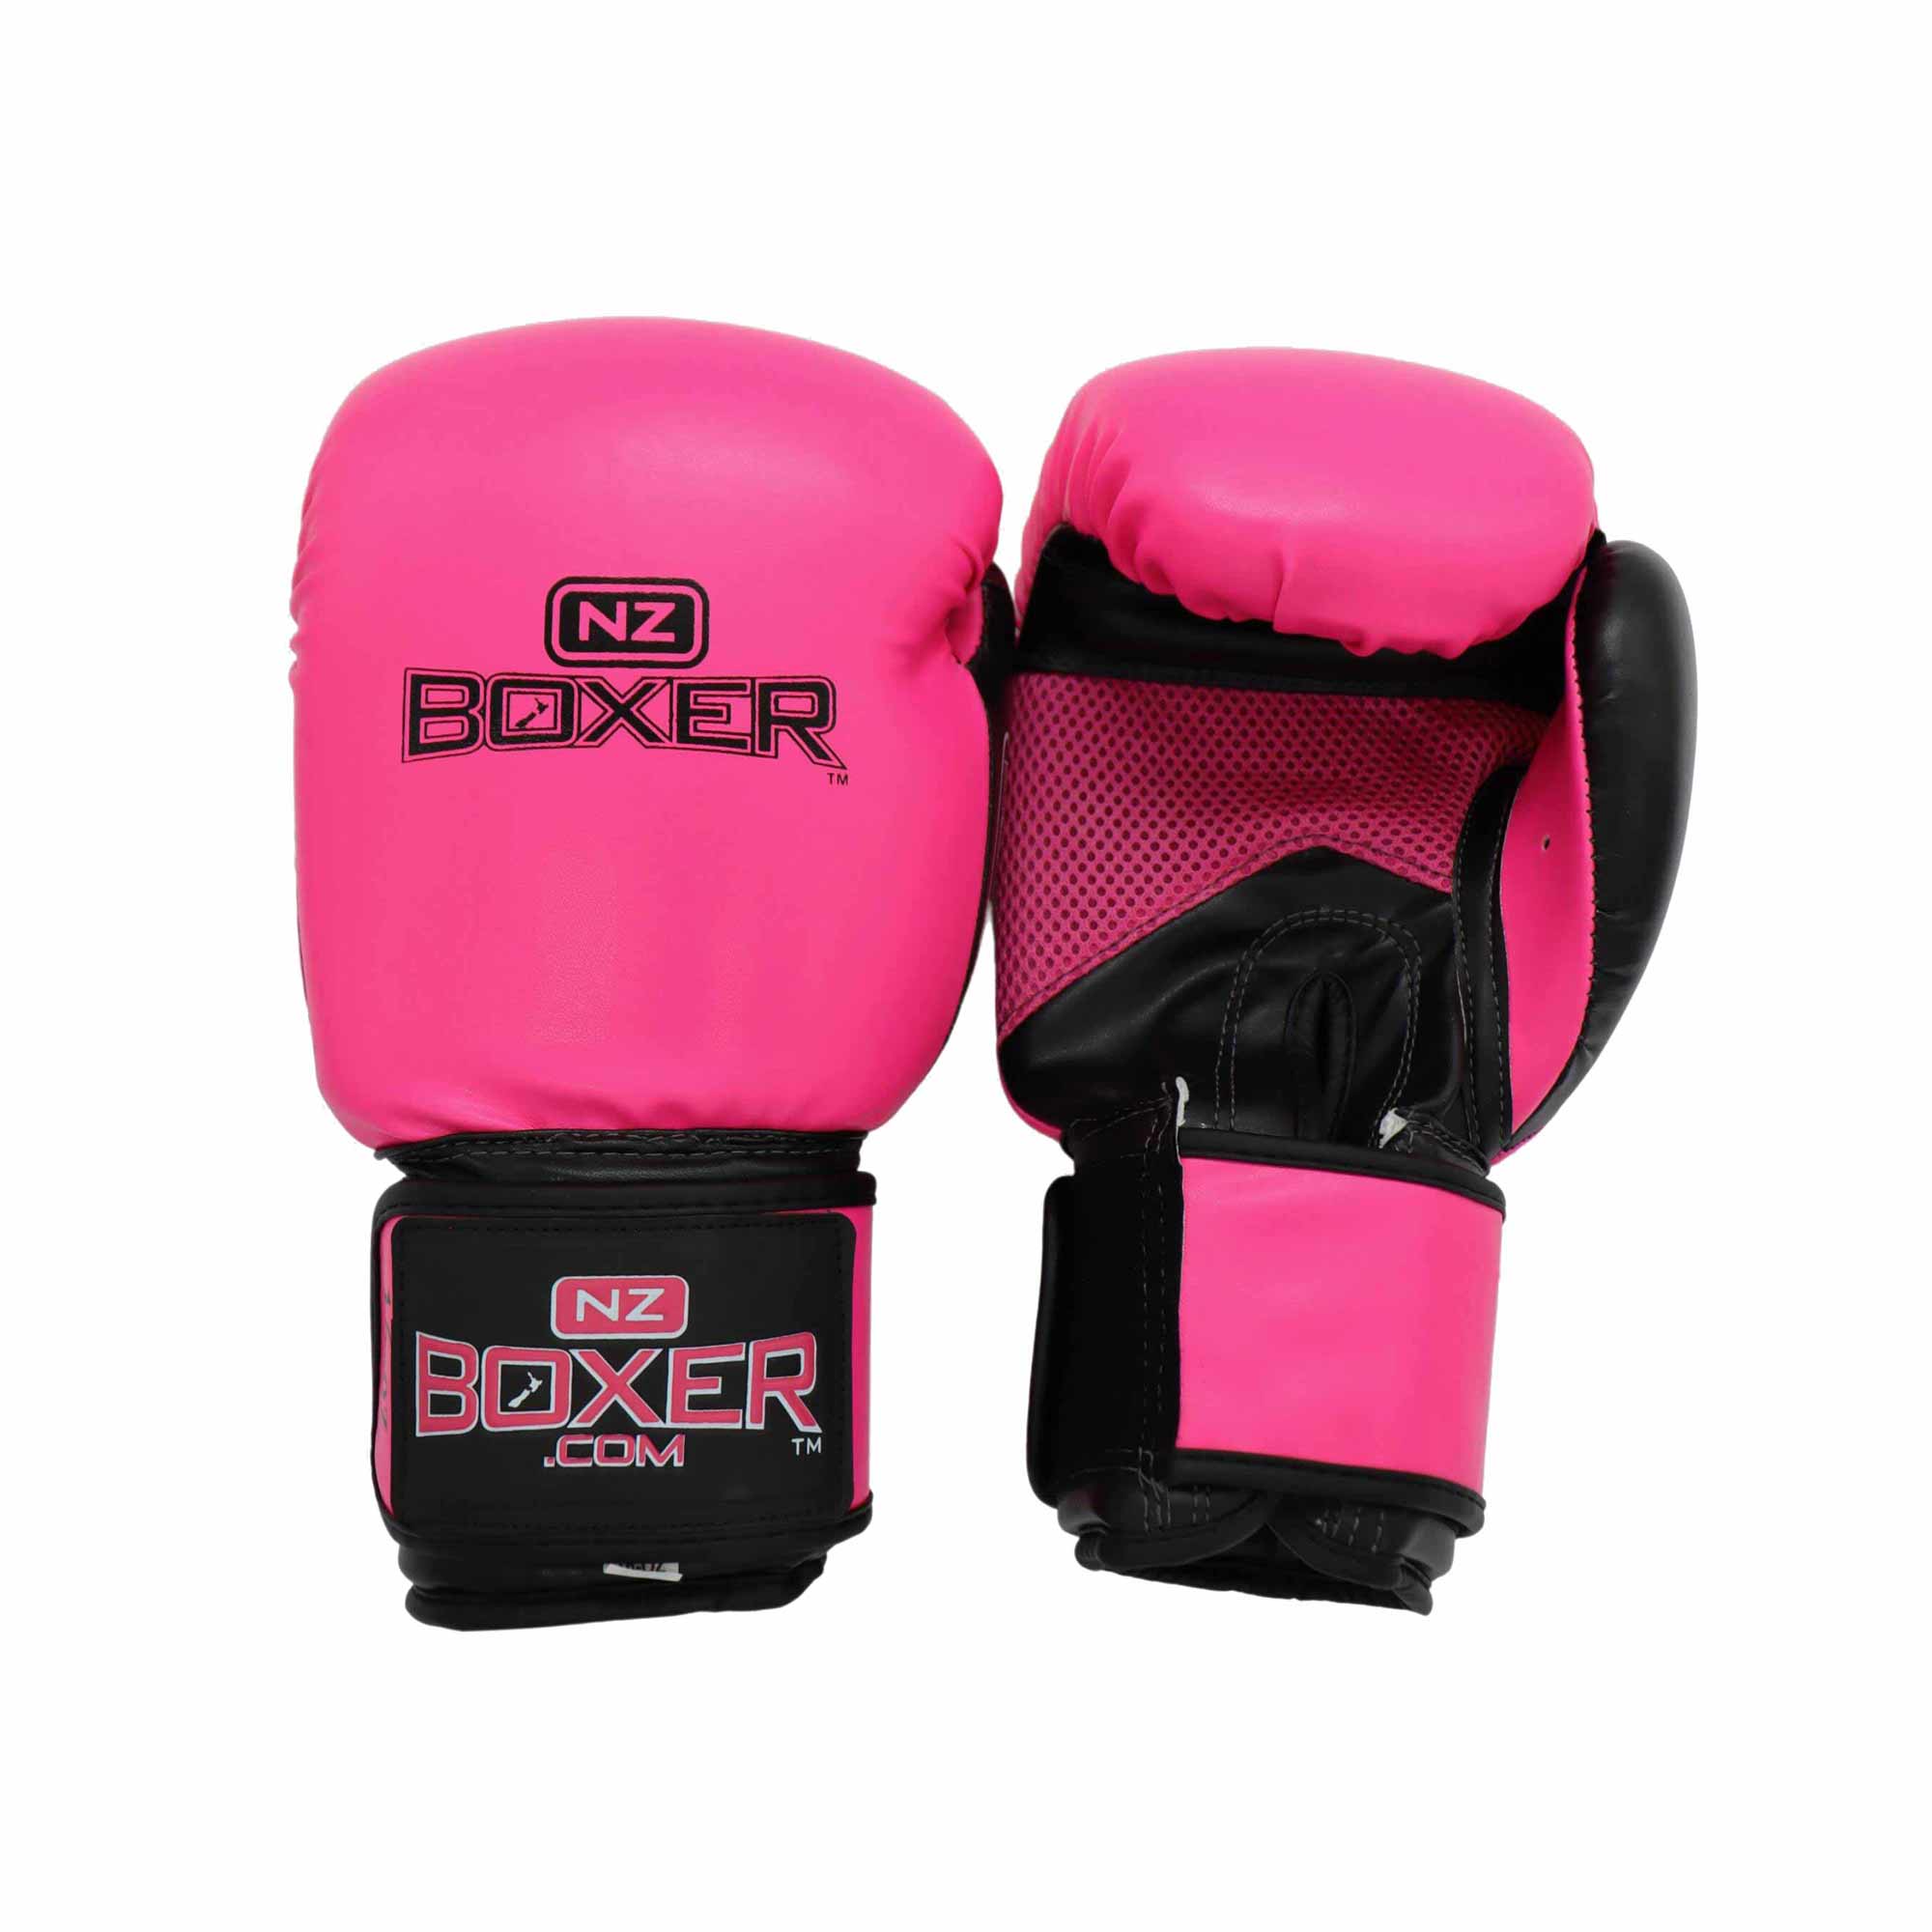 NZ Boxer Core Fitness Glove